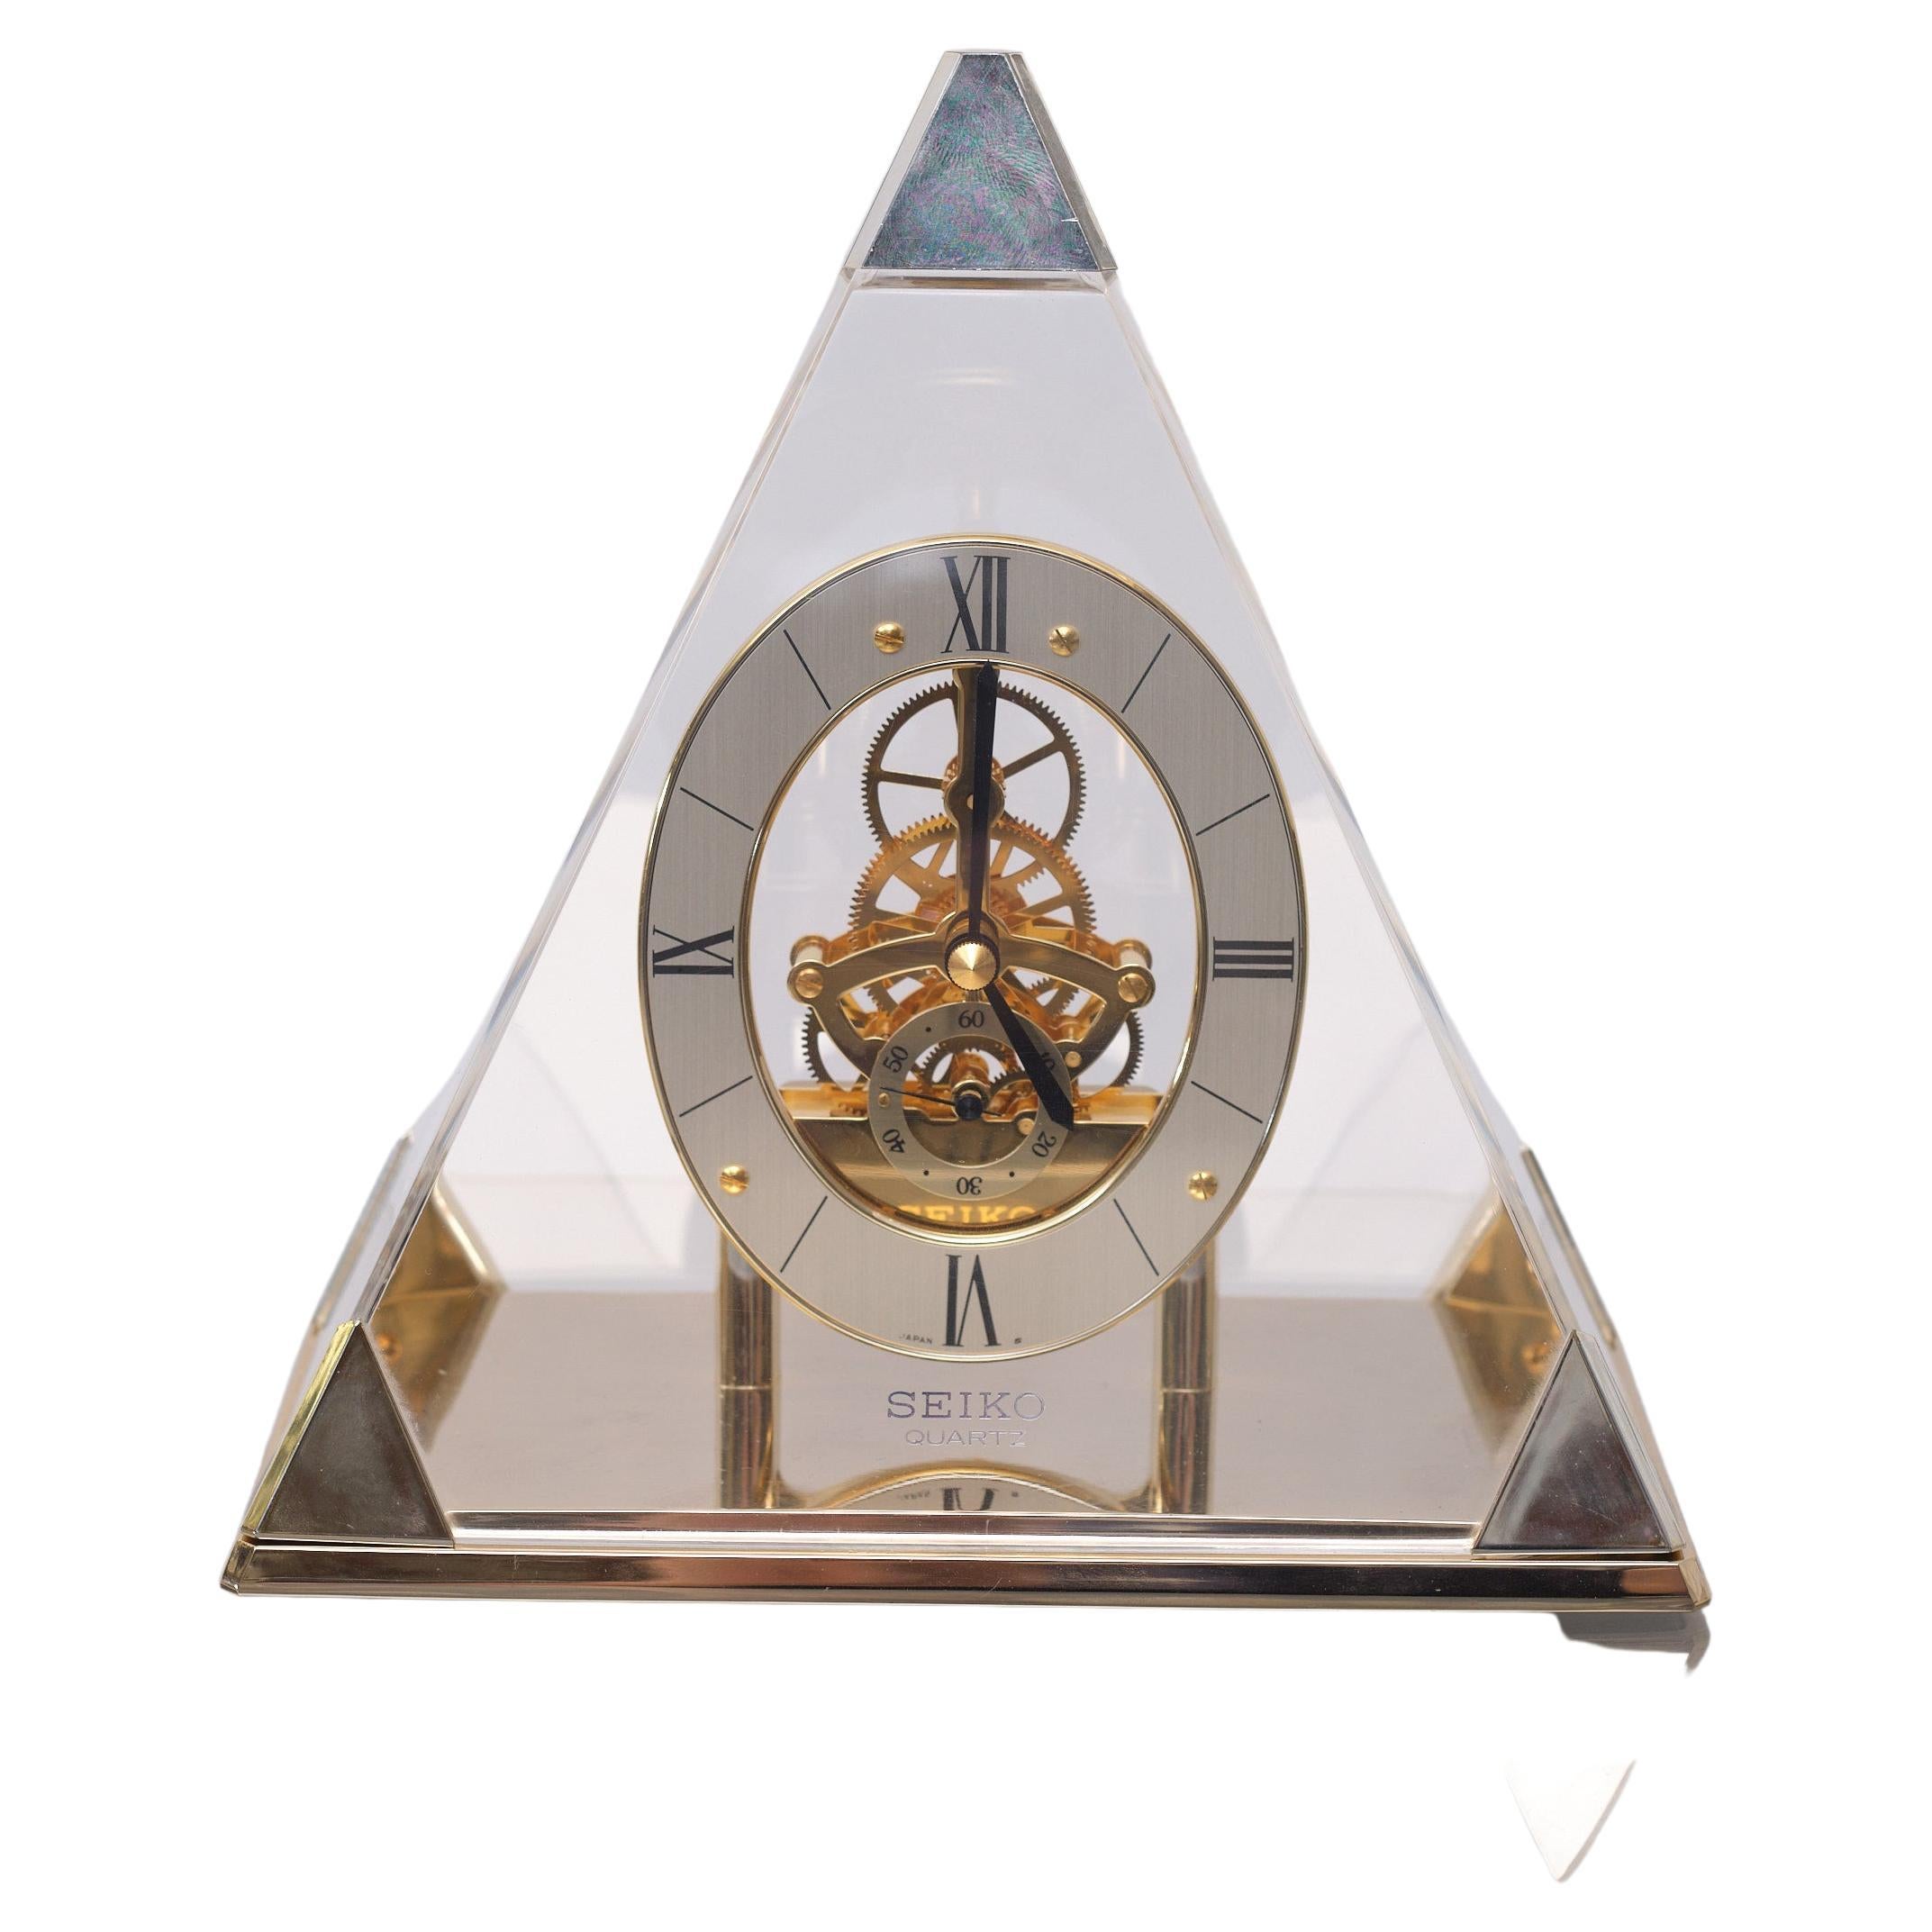 Seiko Quarts Pyramid Skeleton Clock 1980s Japan